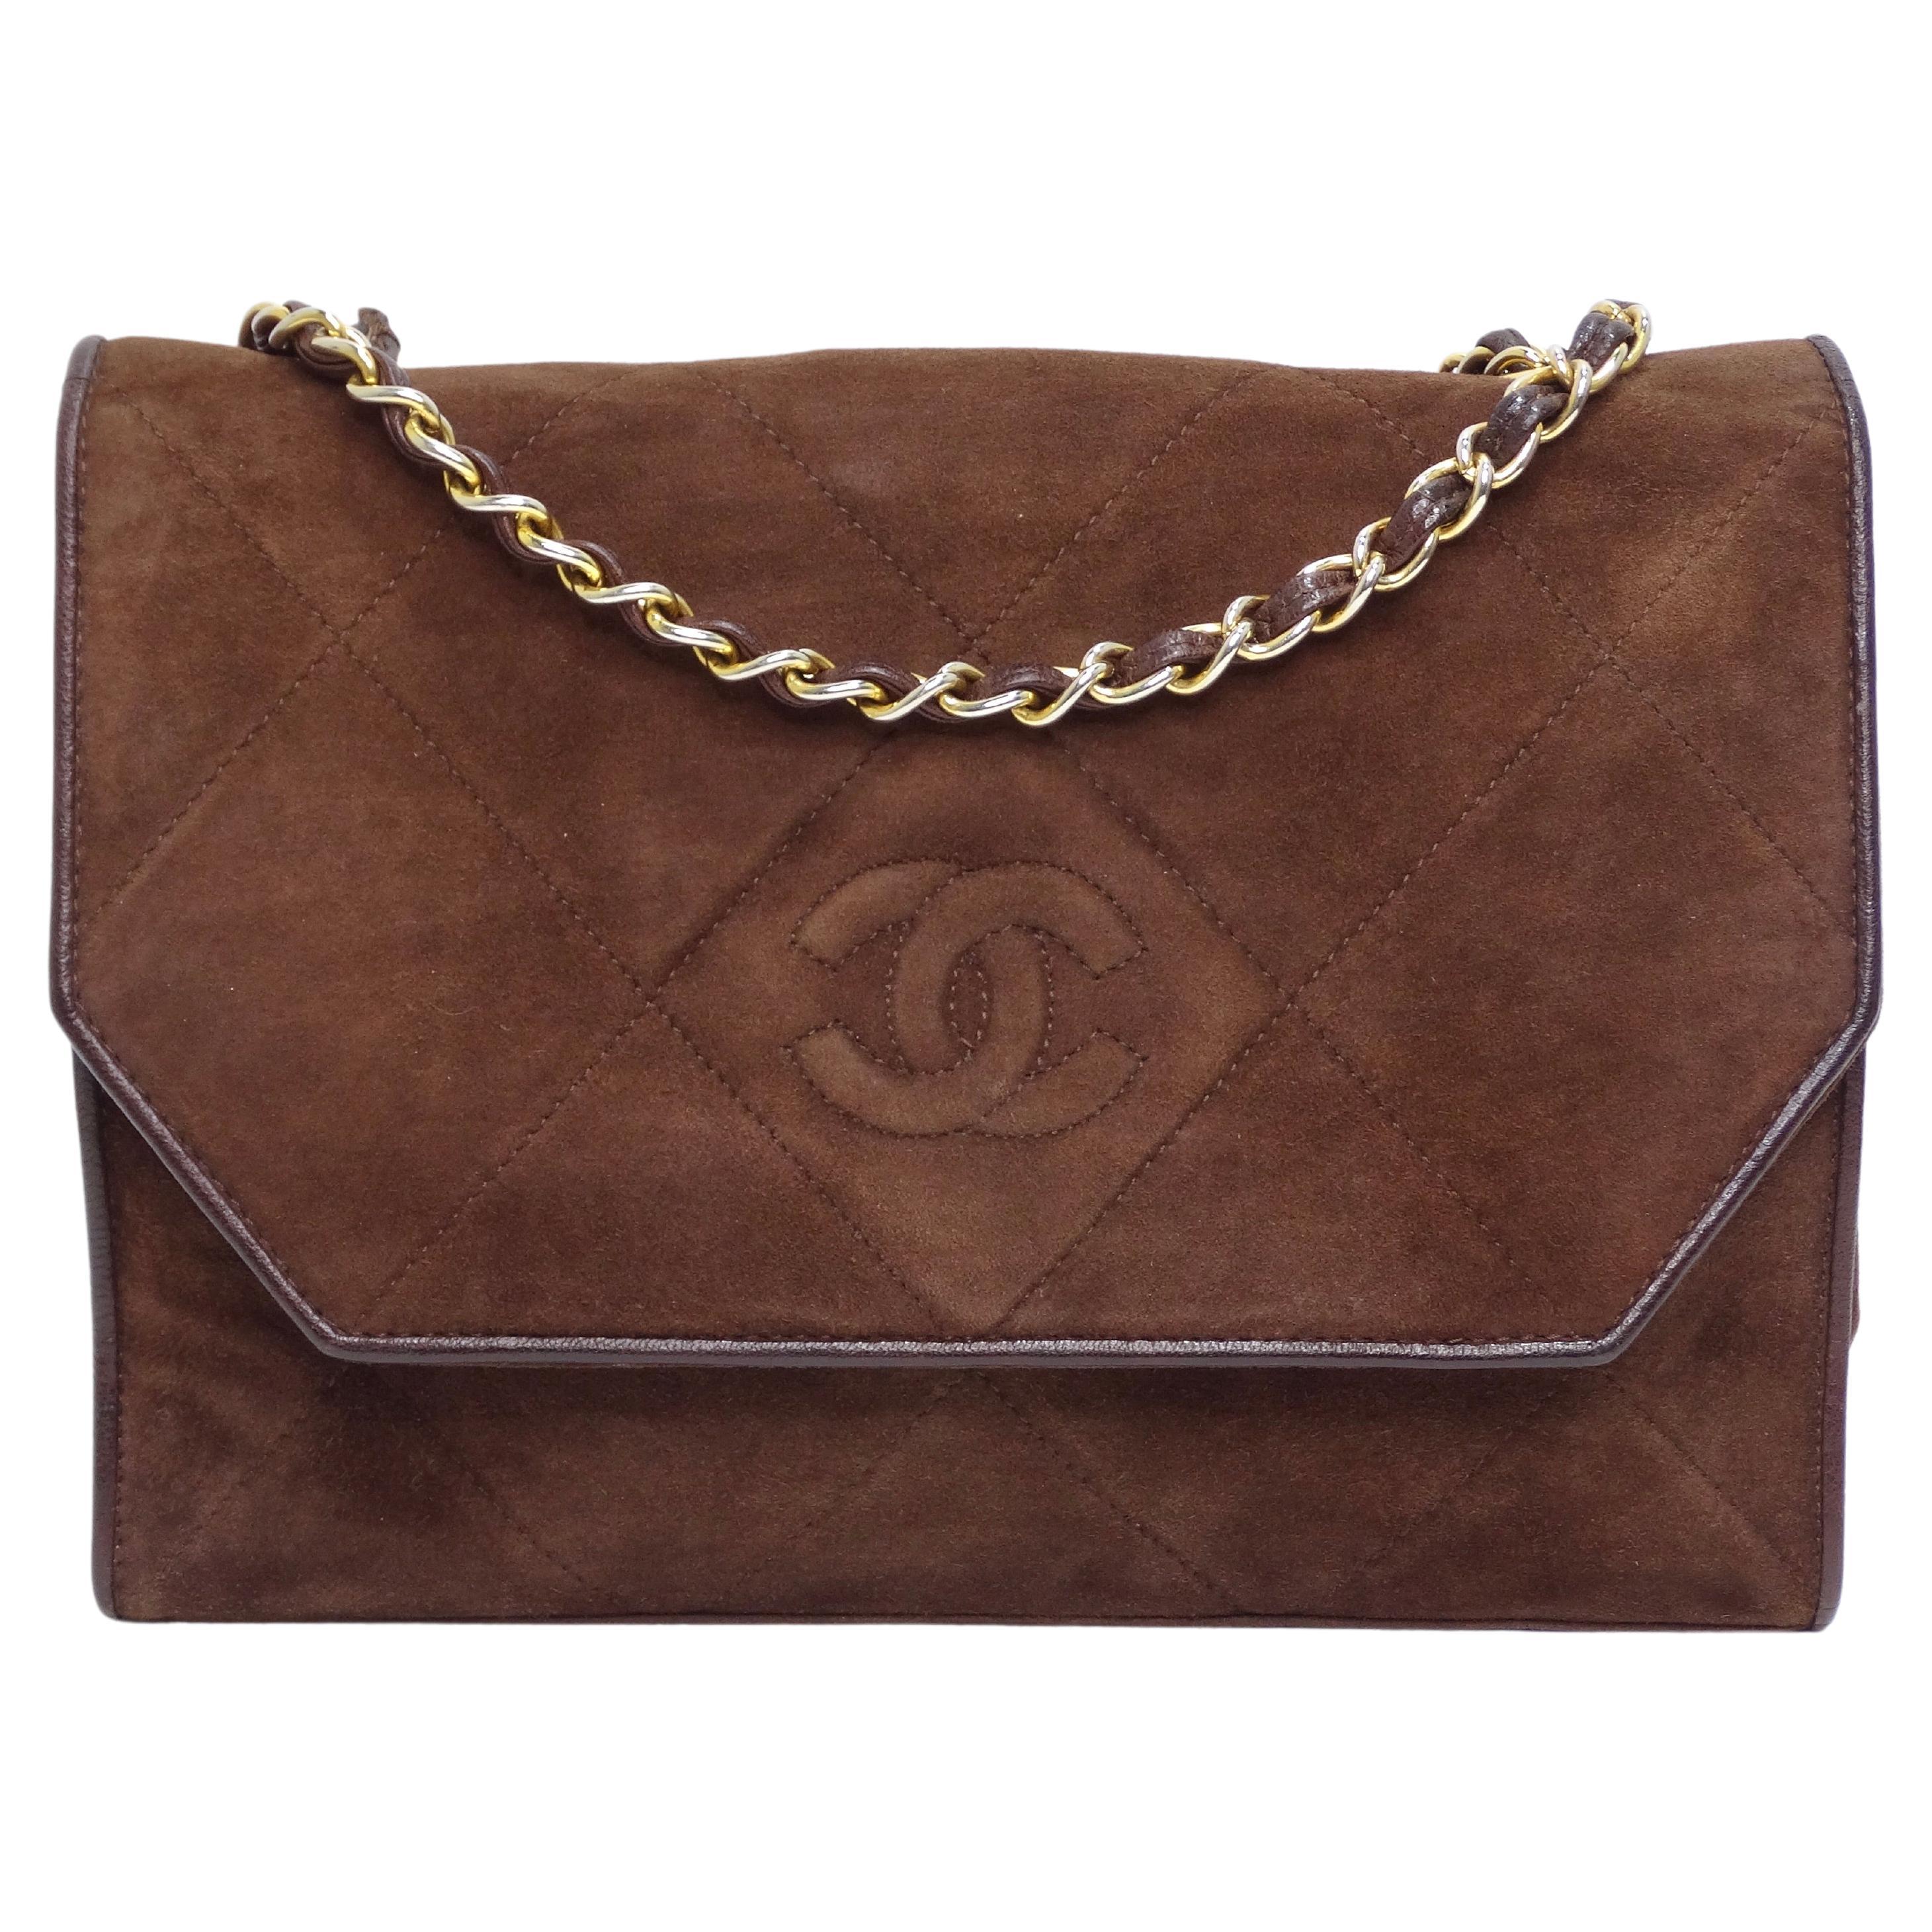 Sale - Women's Chanel Handbags / Purses ideas: at $528.00+